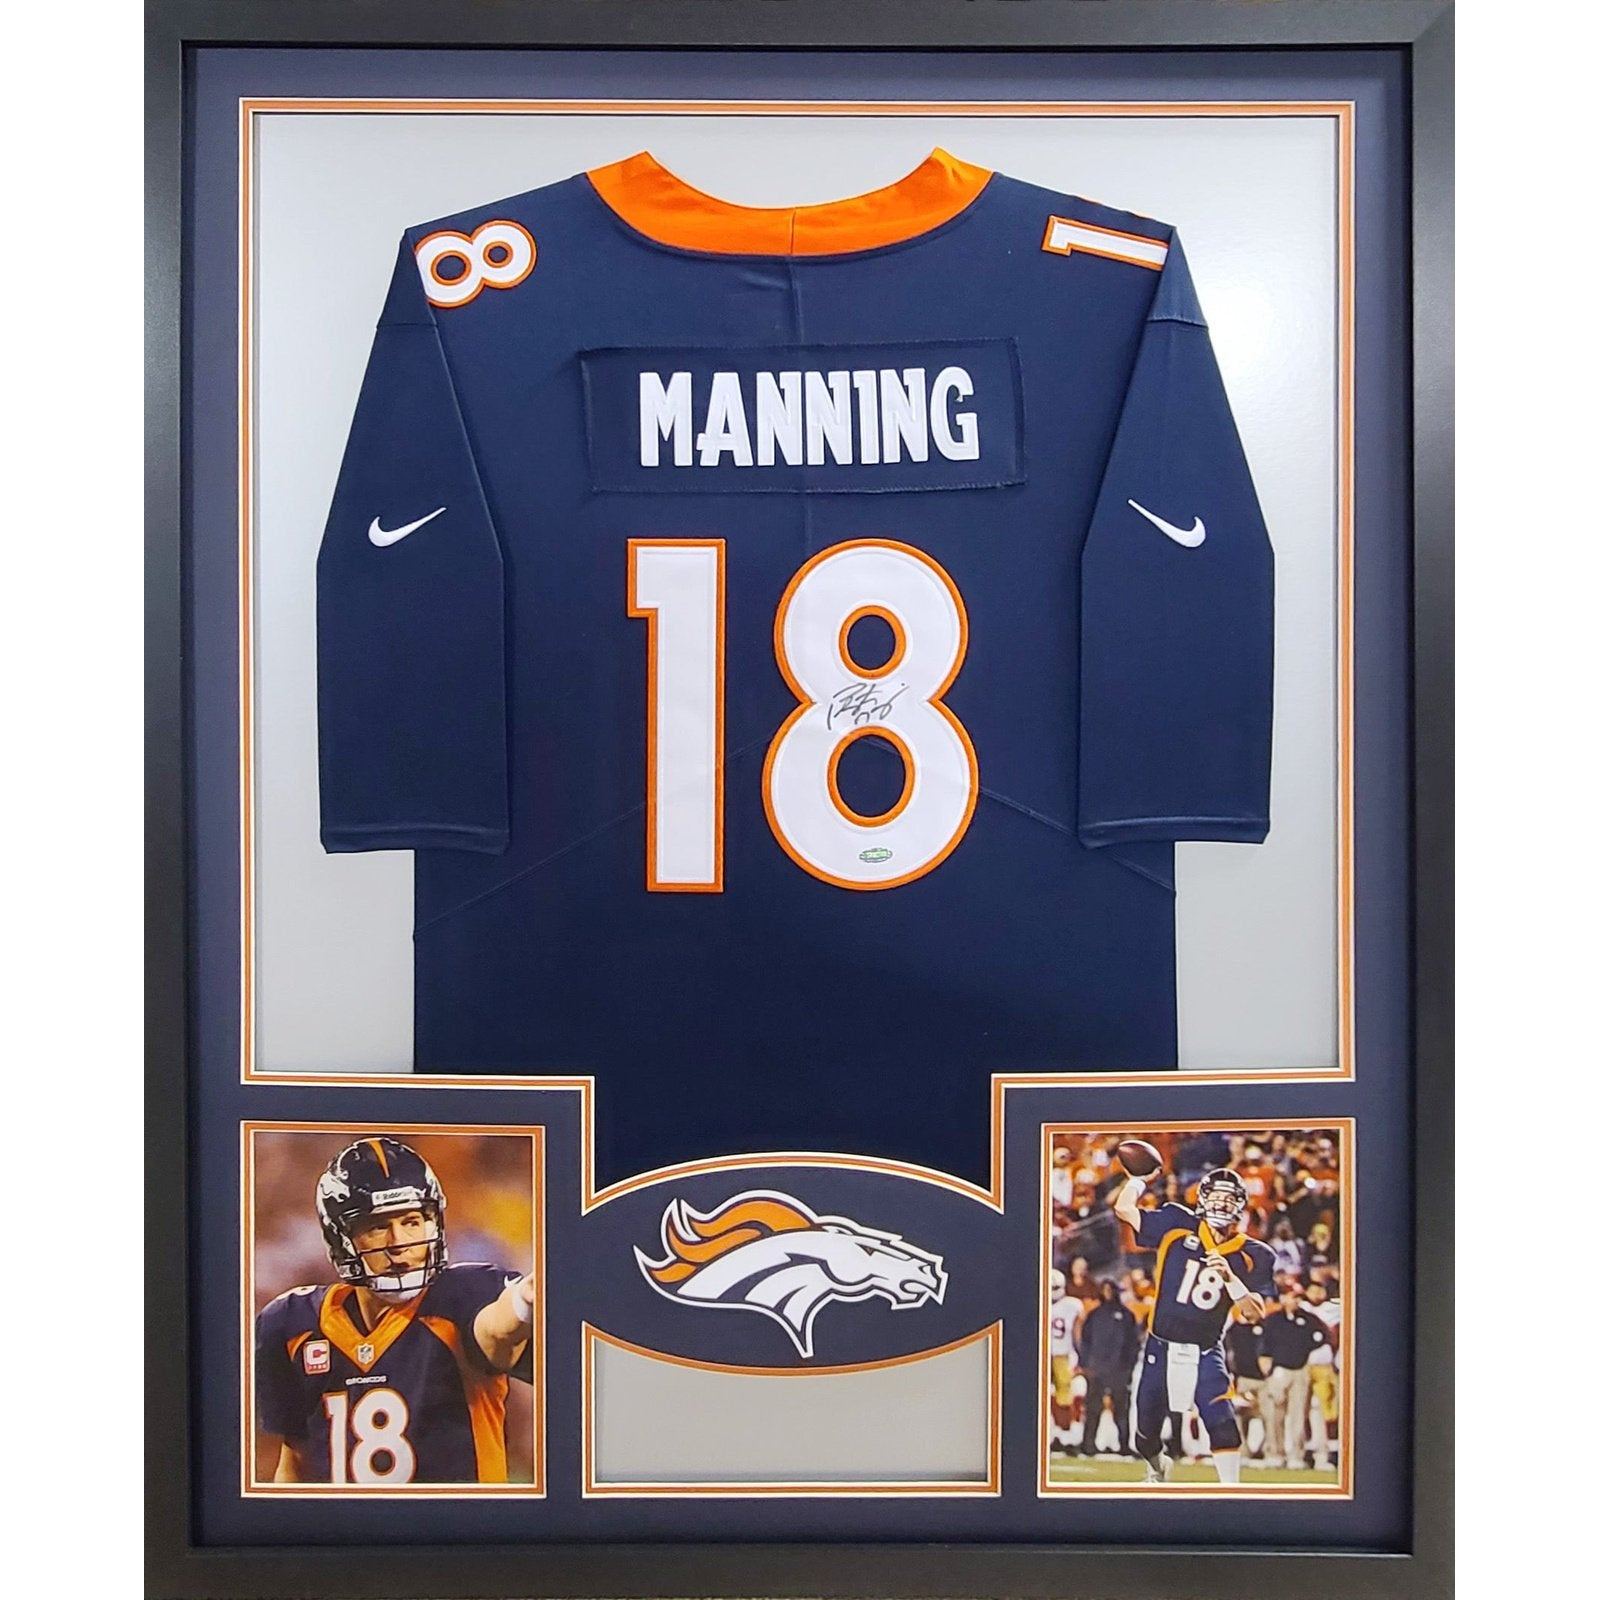 Peyton Manning NFL Original Autographed Jerseys for sale